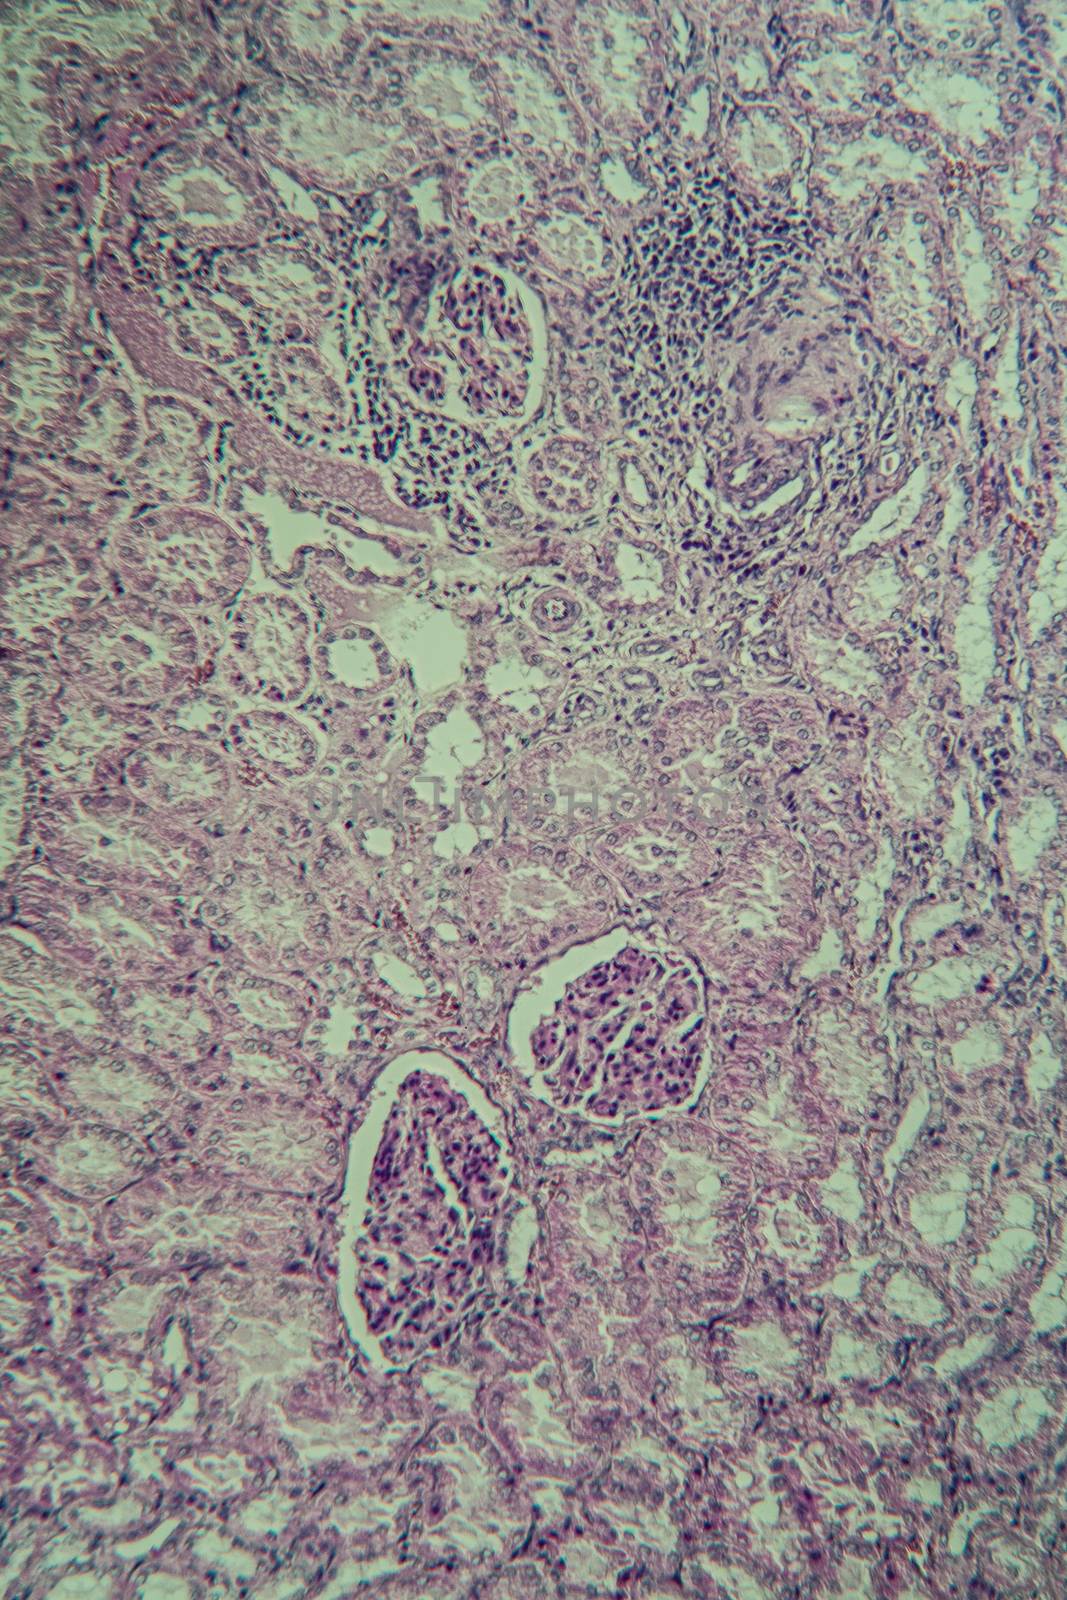 Cross section of the kidney with Glumeroli 100x